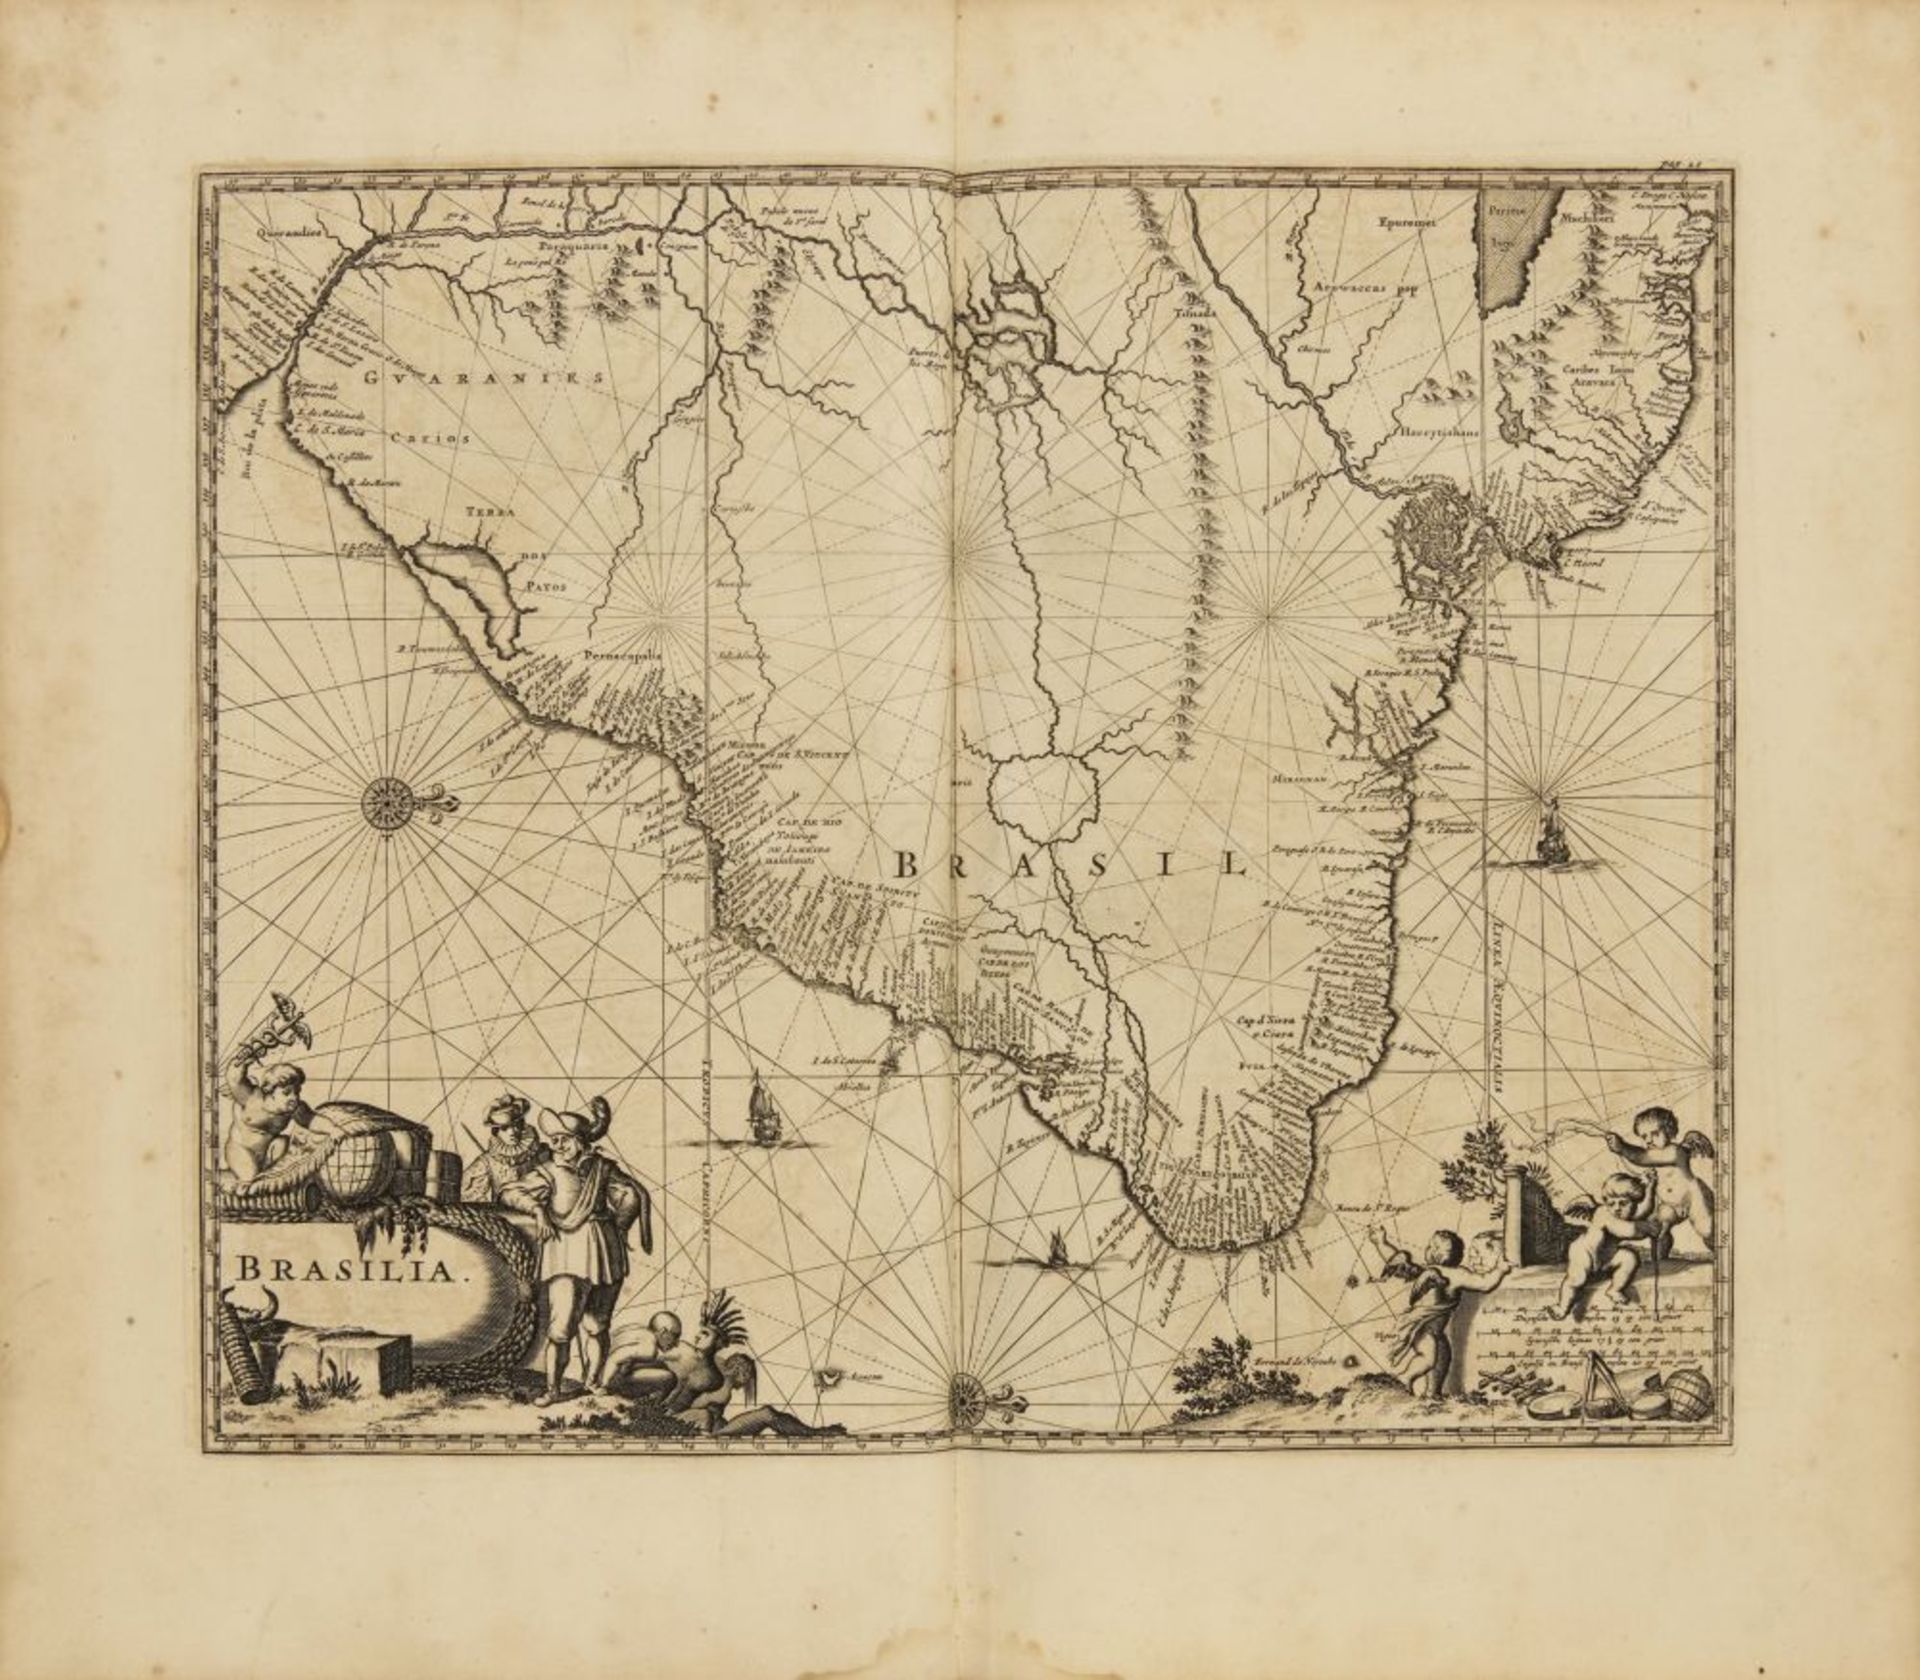 J. Nieuhof, Brasiliaense Zee- en Lant-Reize. Amsterdam 1682. - Image 2 of 6